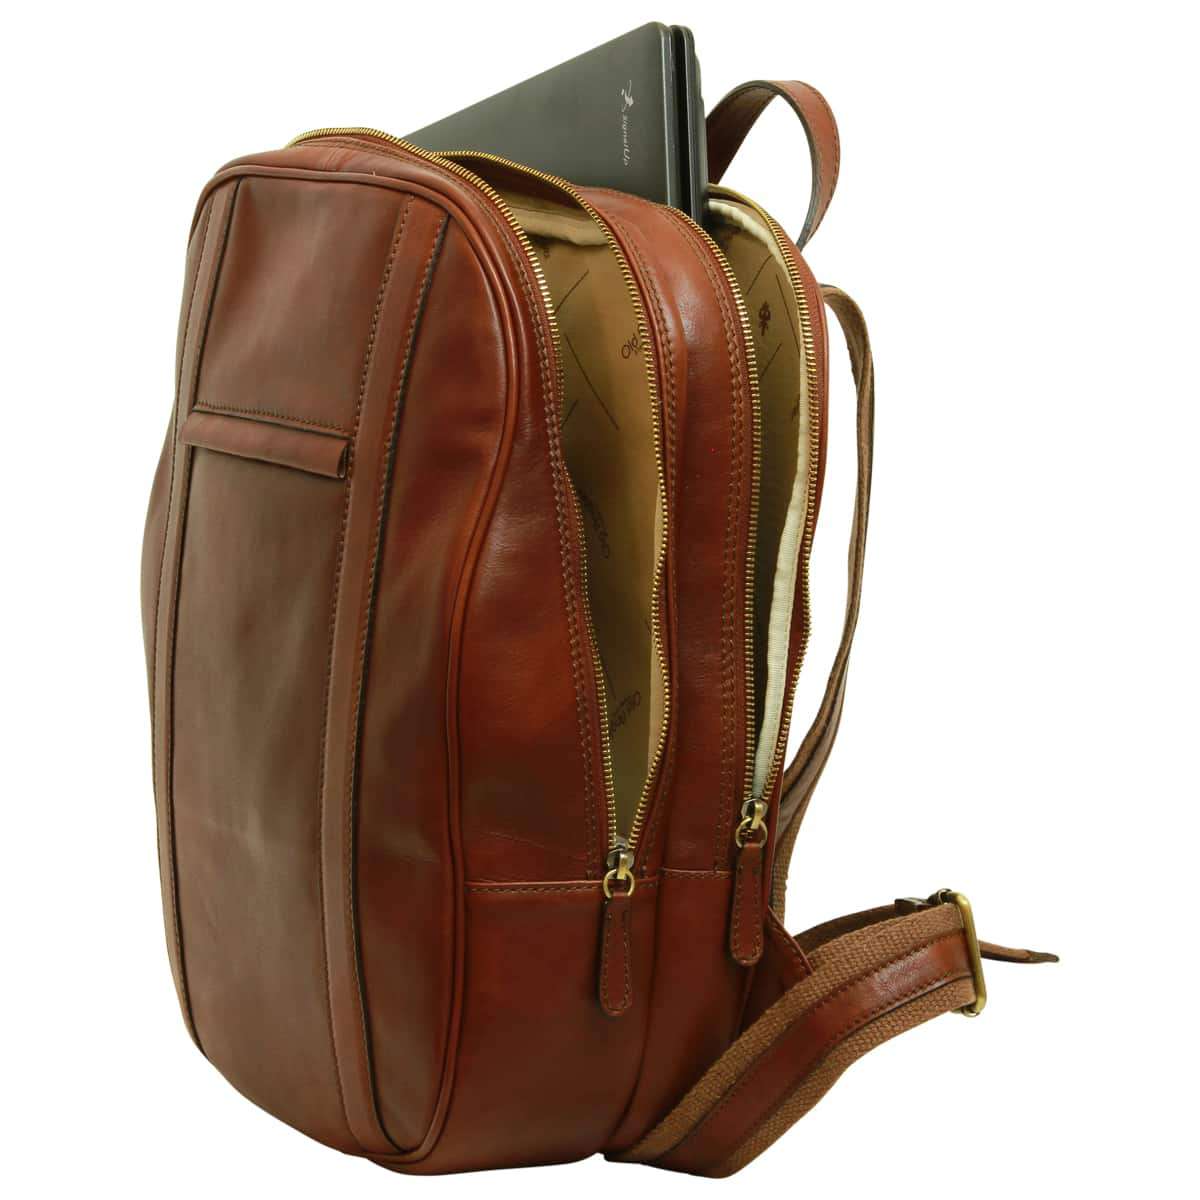 Soft Calfskin Leather Laptop Backpack - Brown | 031491MA US | Old Angler Firenze